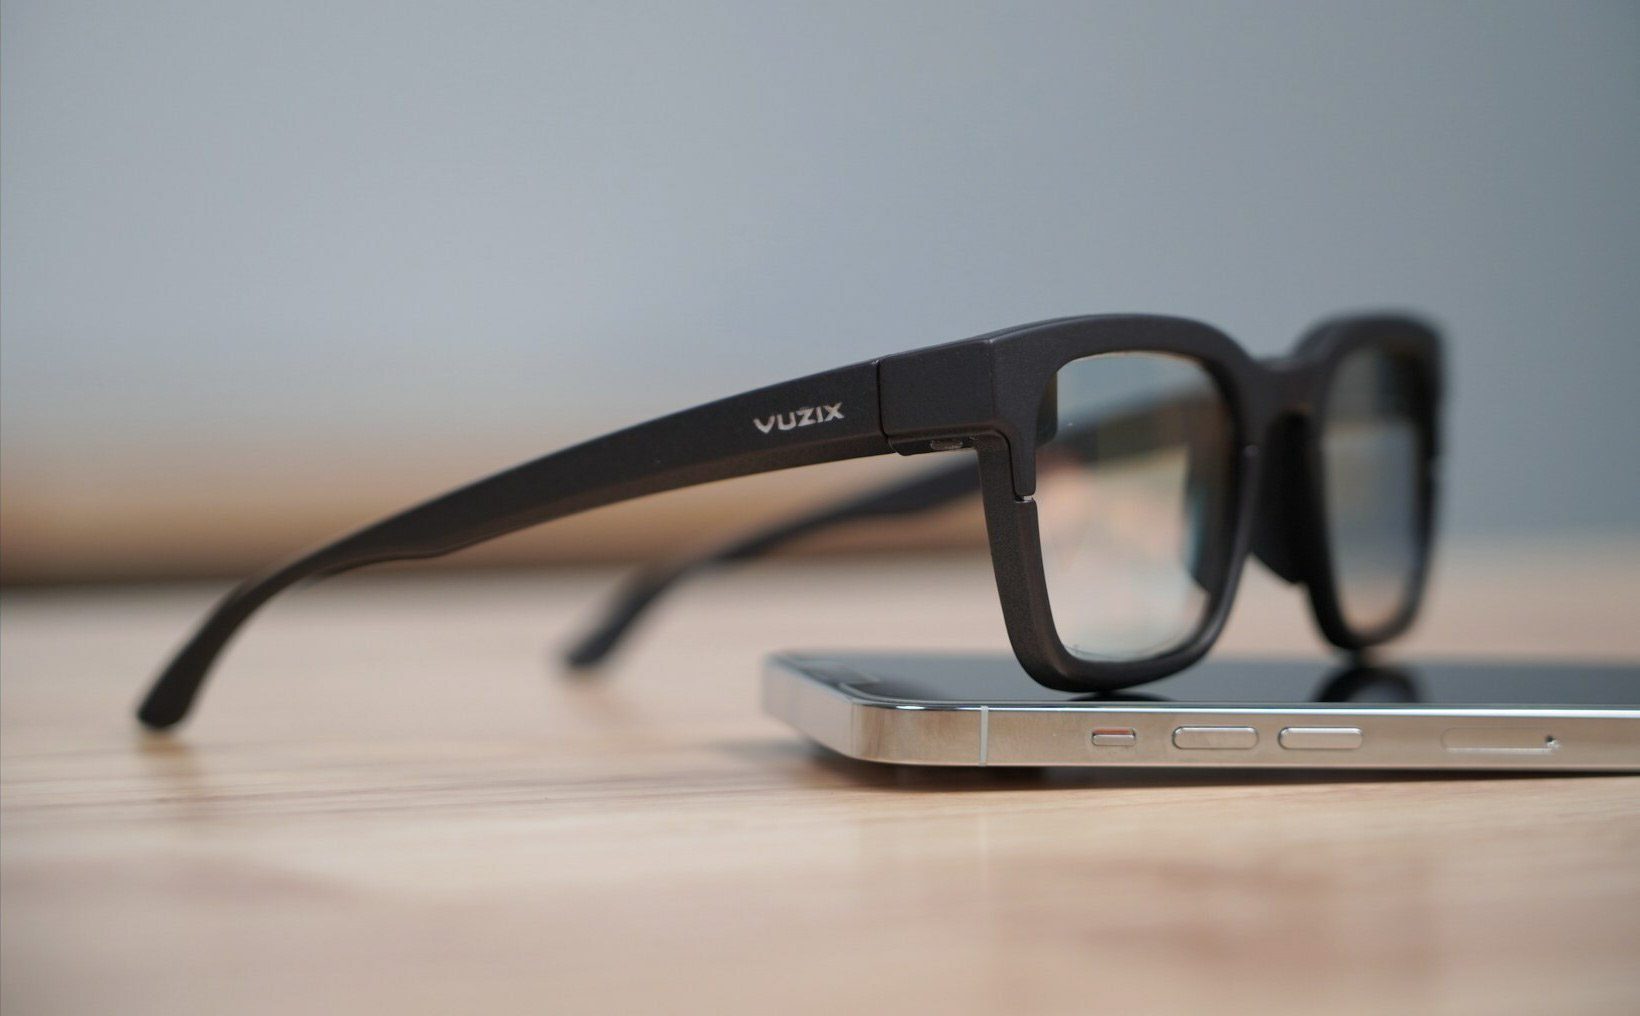 Vuzix glasses resting on a smartphone